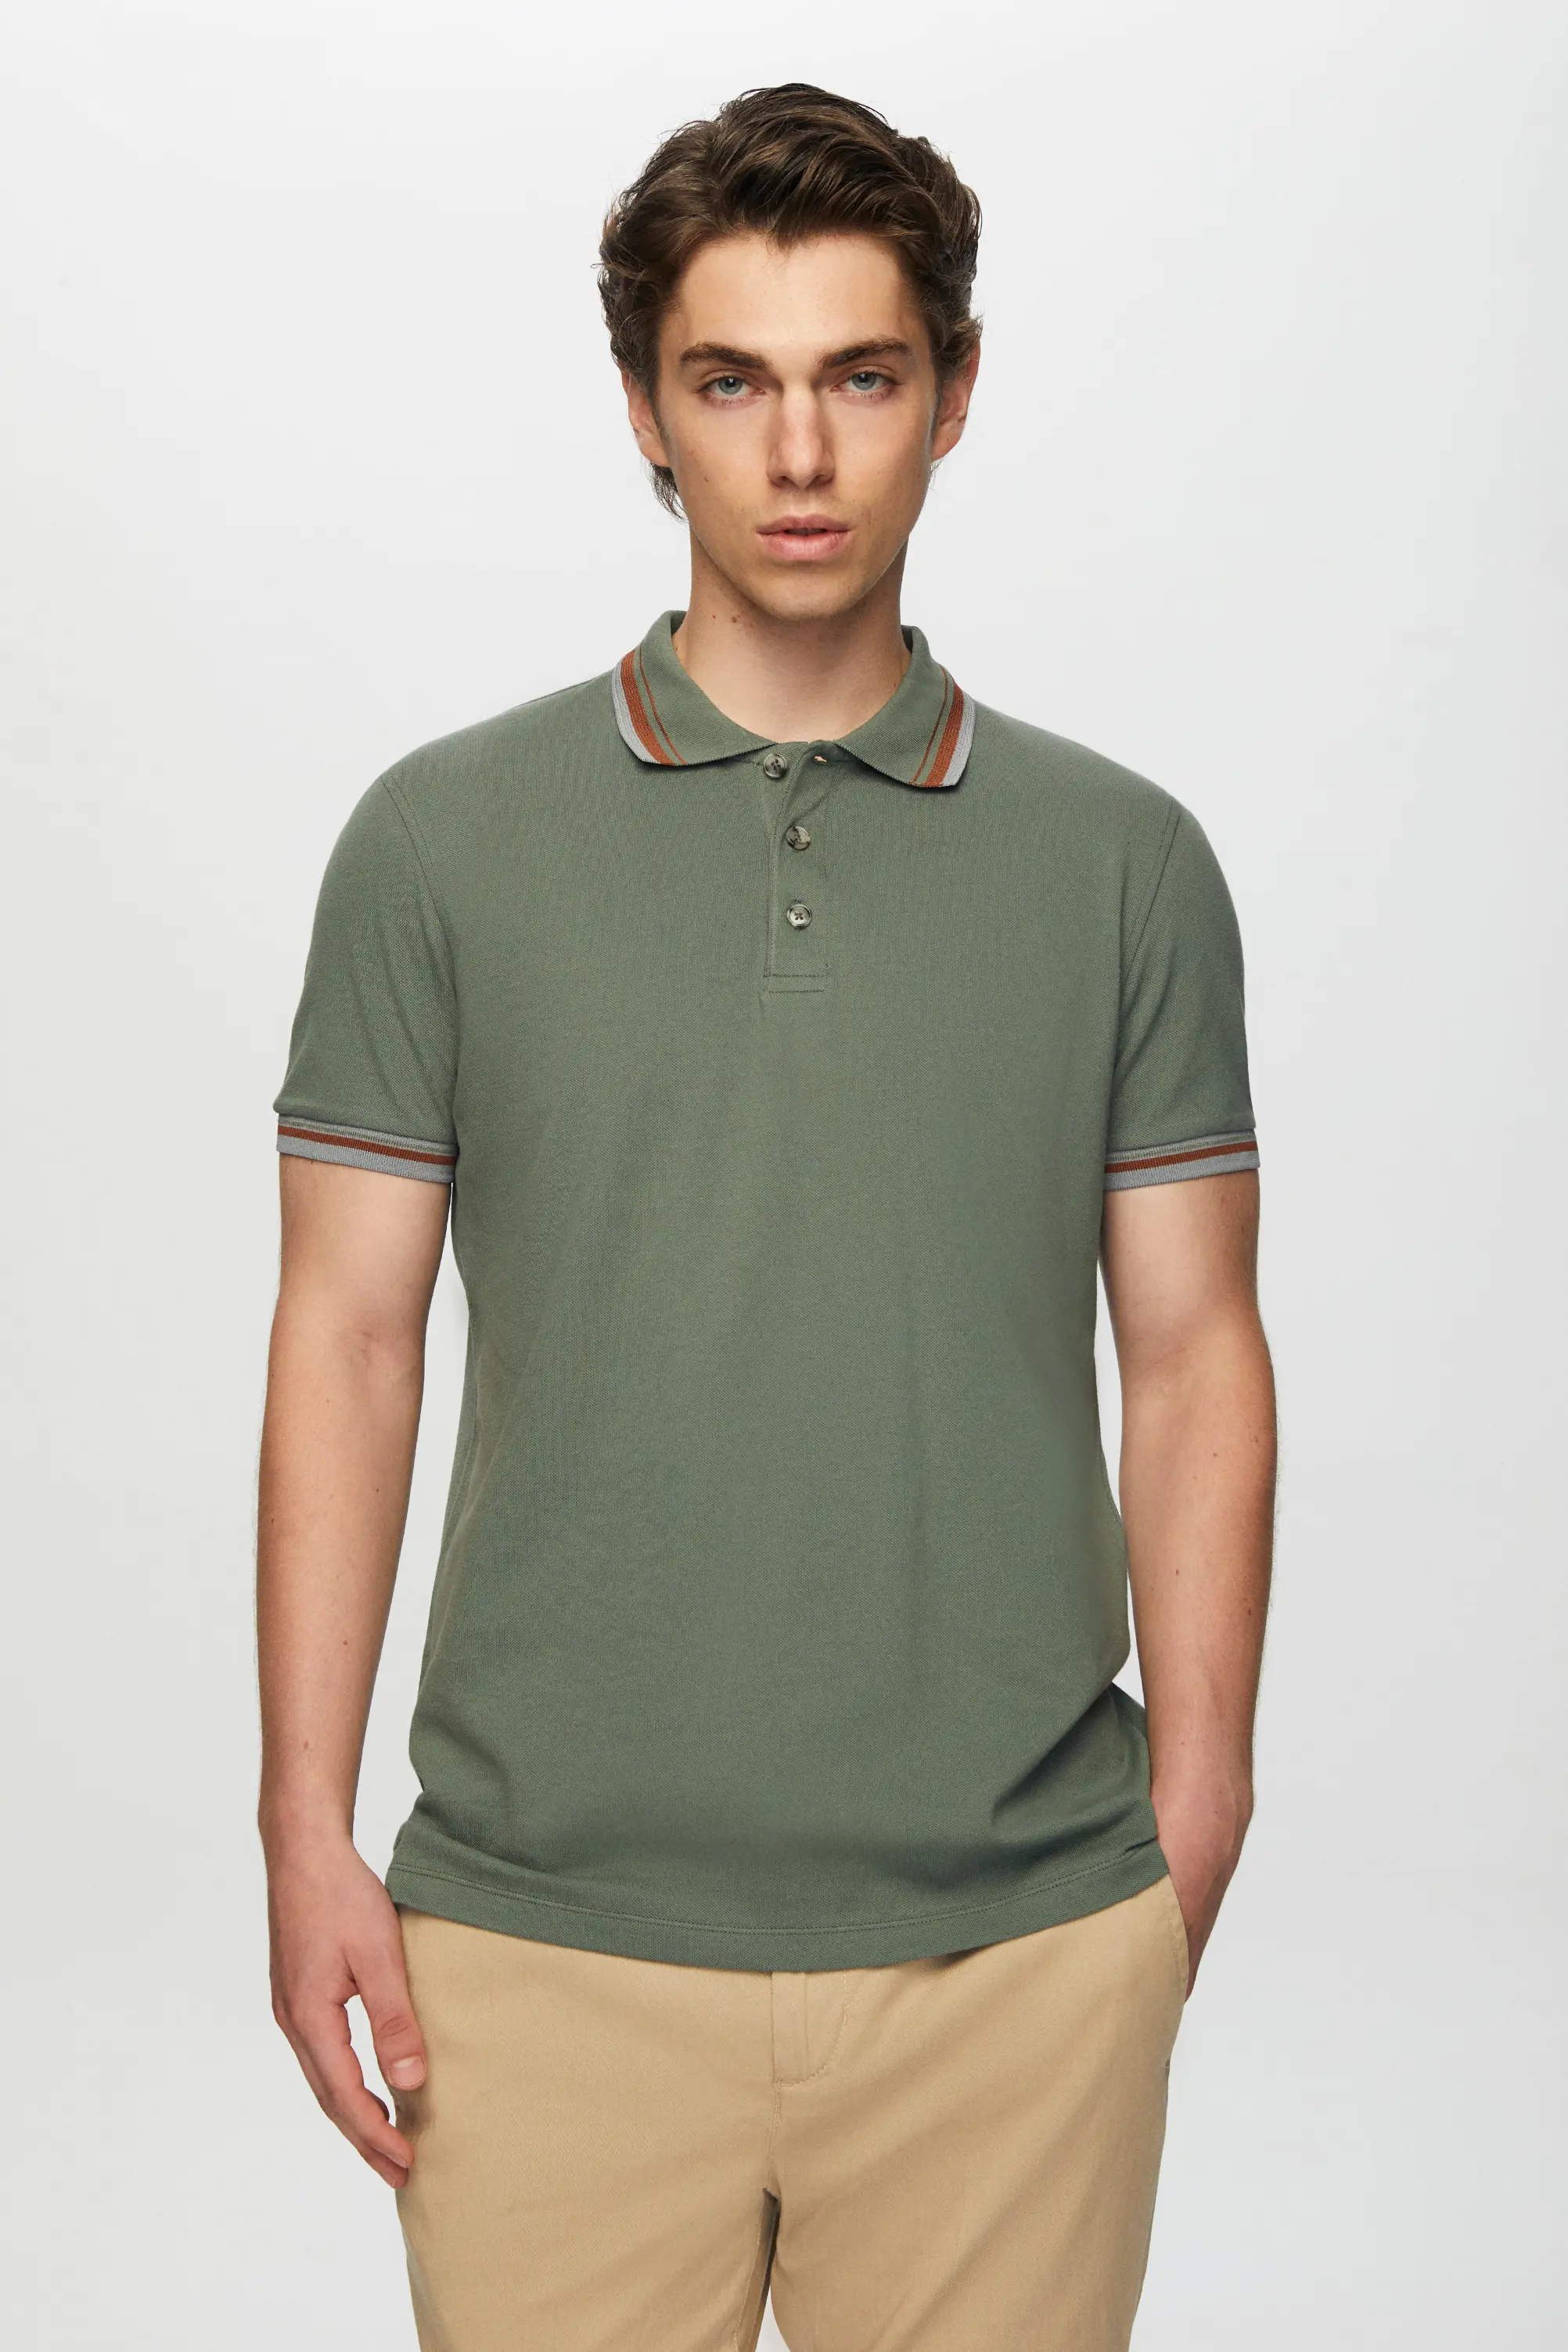 Damat Tween Tween Yeşil T-shirt. 1